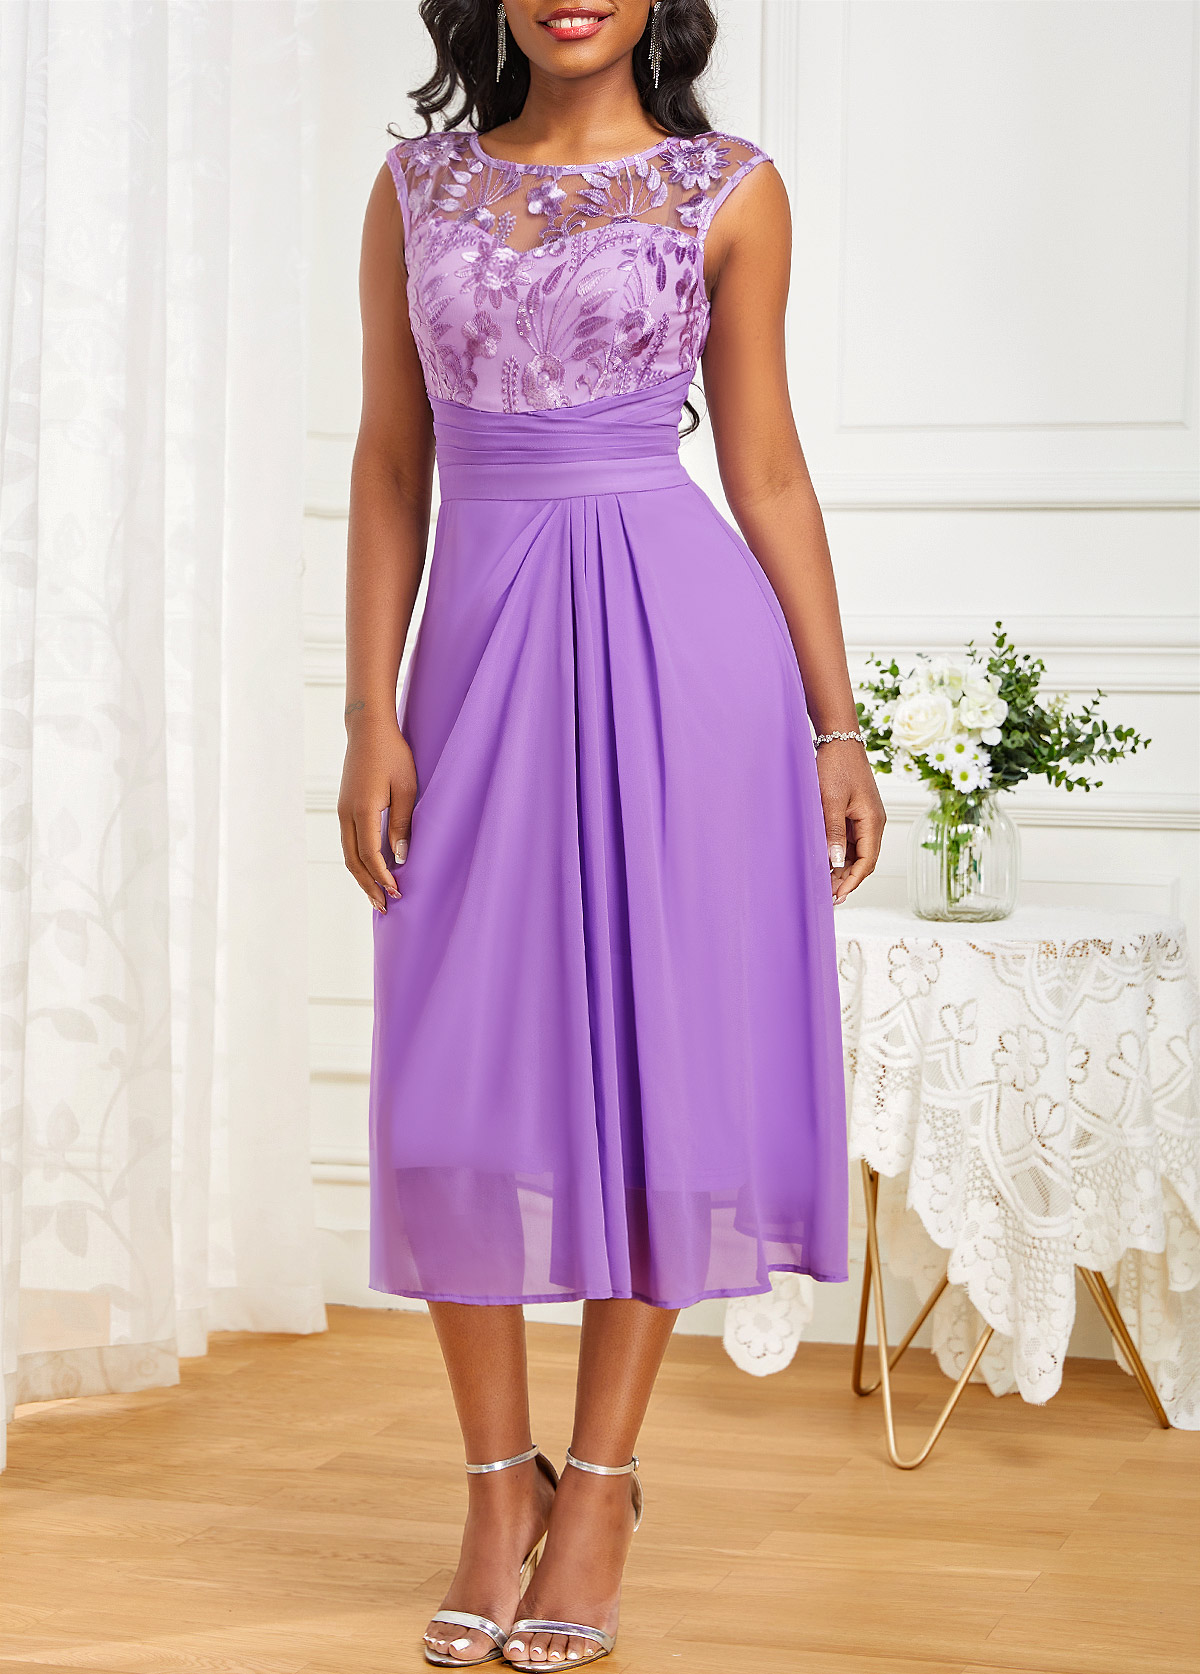 Lace Round Neck Sleeveless Neon Violet Dress